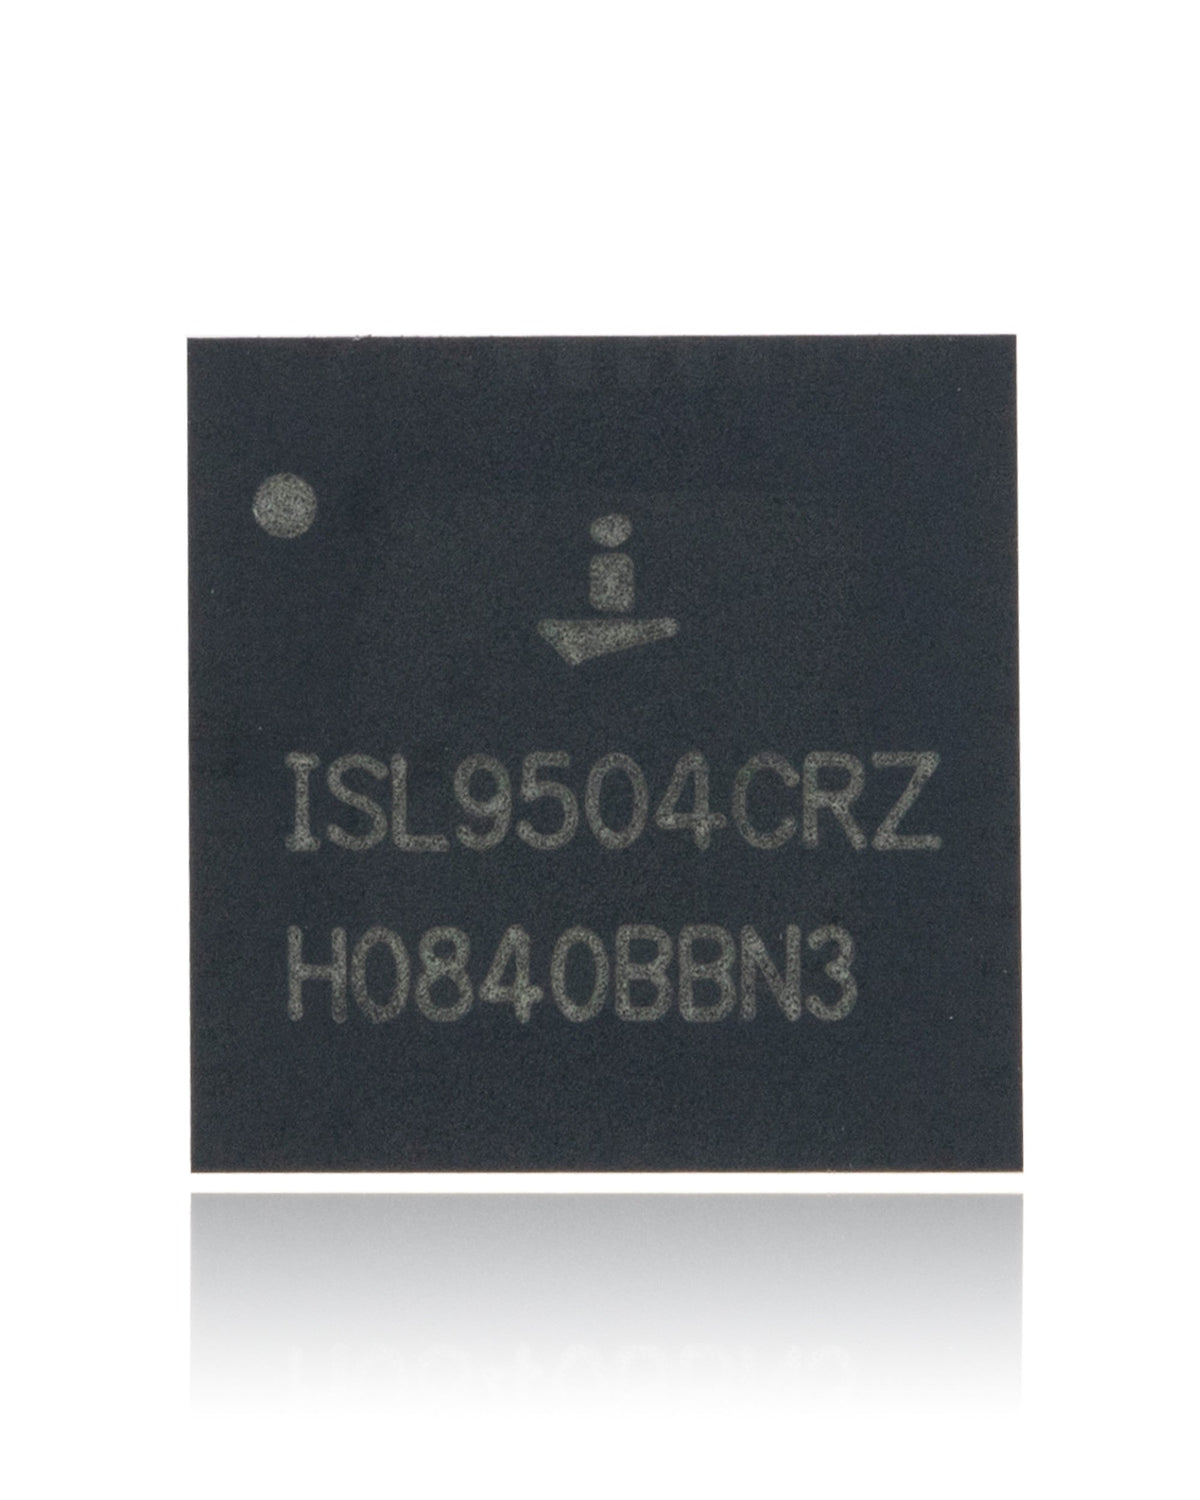 POWER IC CHIP COMPATIBLE WITH LAPTOPS / MACBOOK (INTERSIL: ISL9504BHRZ / ISL9504B / ISL9504 / ISL9504CRZ : QFN-48 PIN)